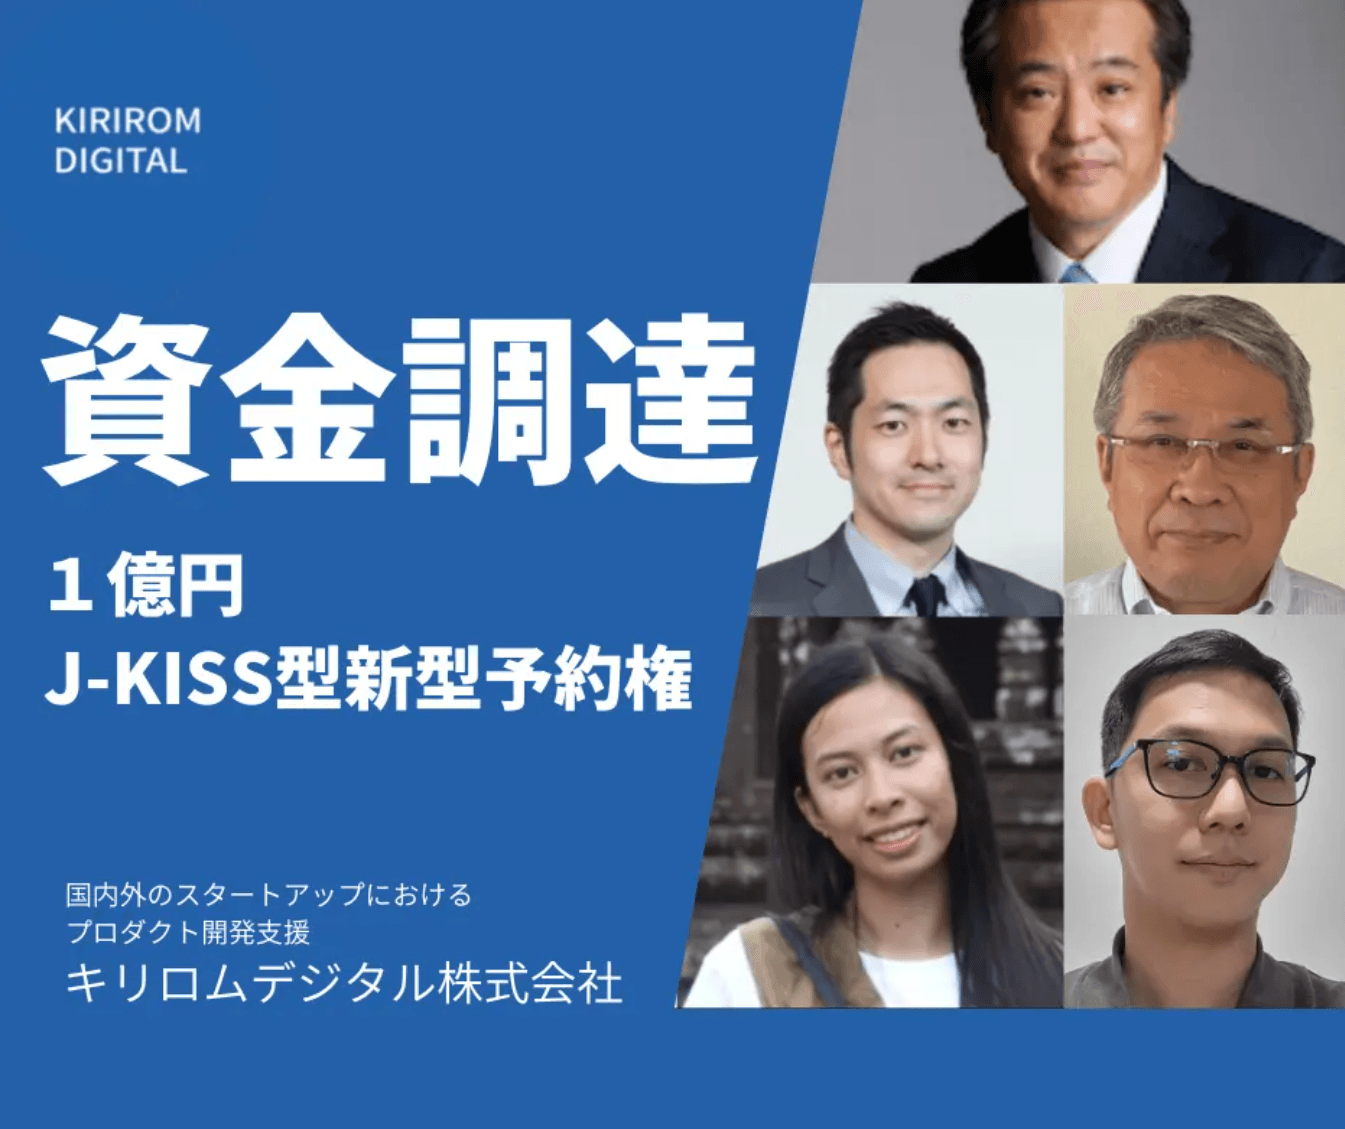 J-KISS型新株予約権にて1億円の資金調達を実施